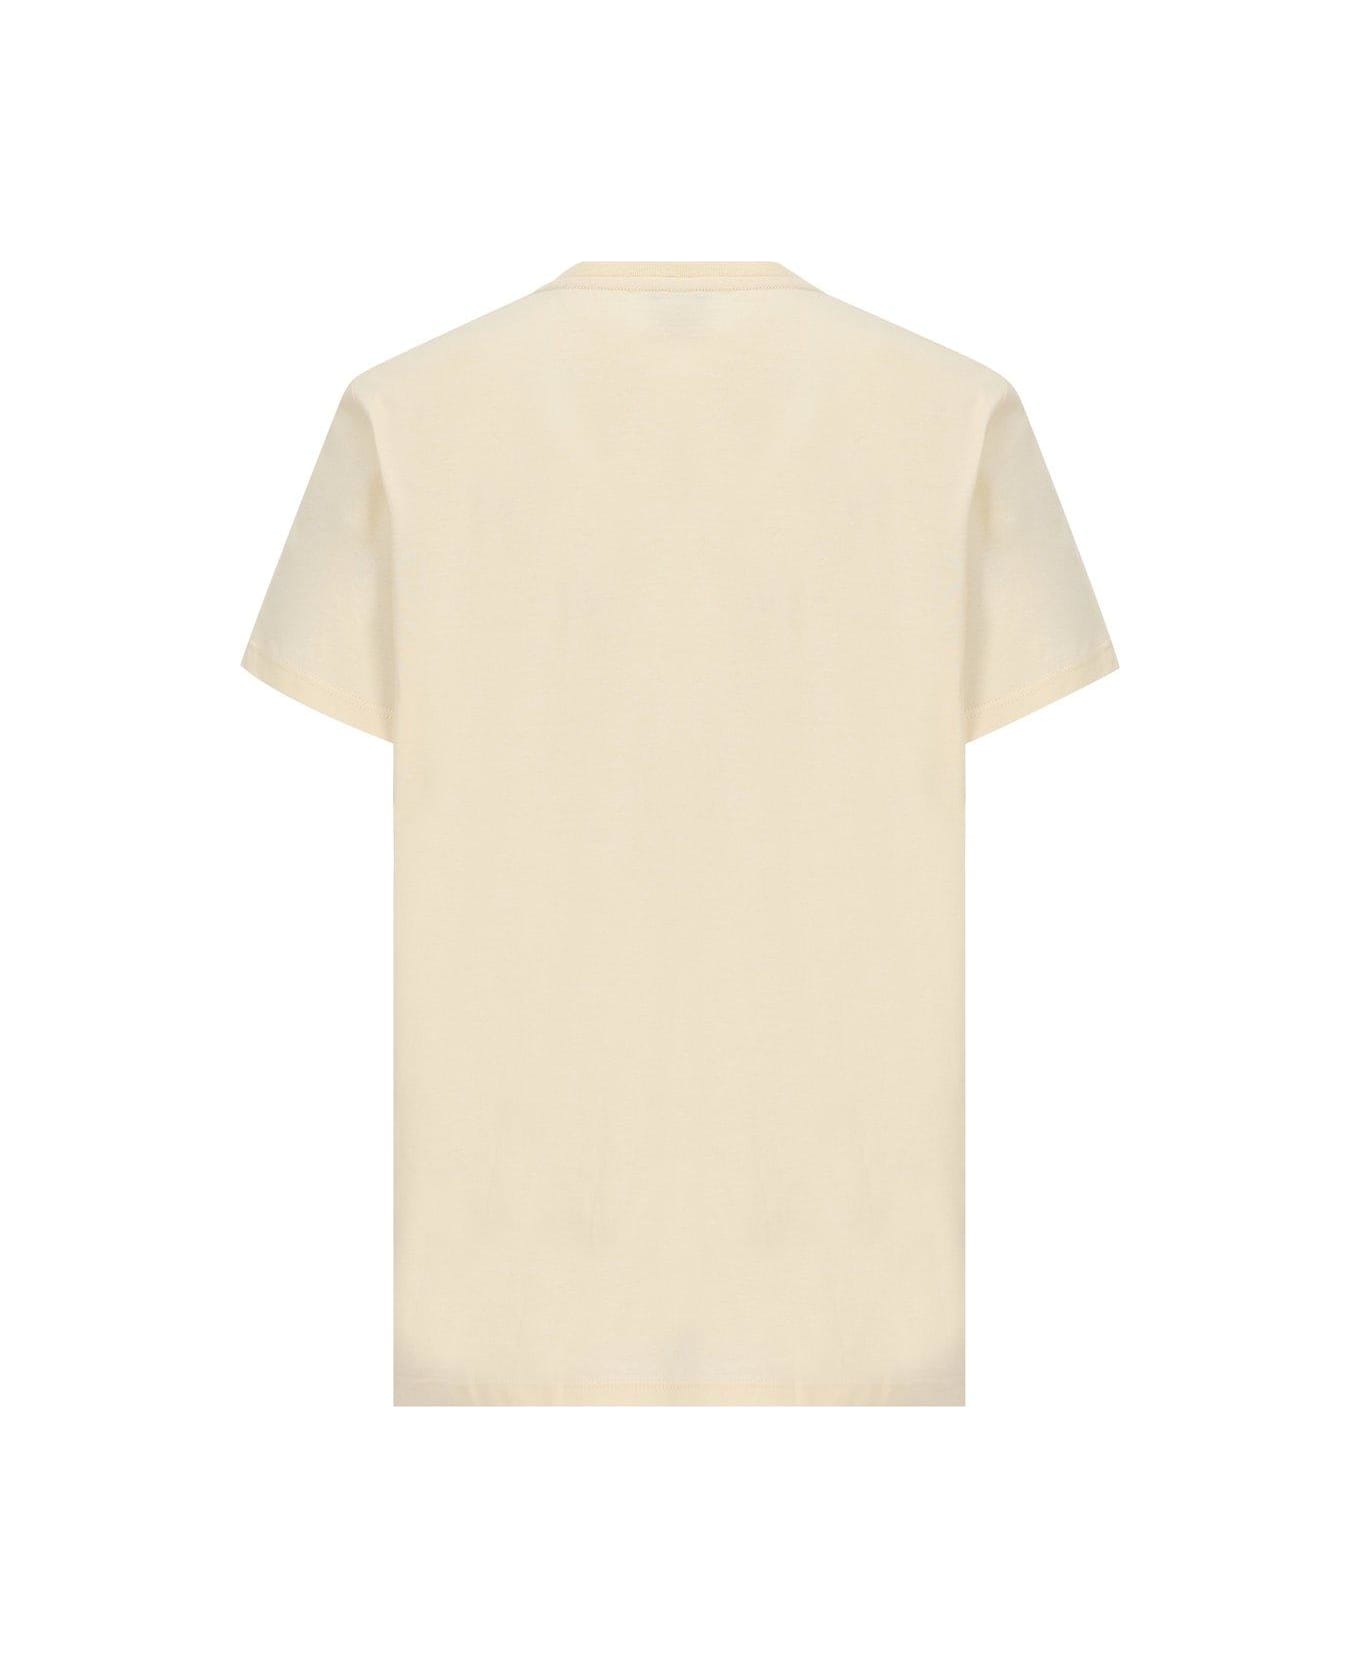 Gucci X Peter Rabbit Printed Jersey T-shirt - IVORY